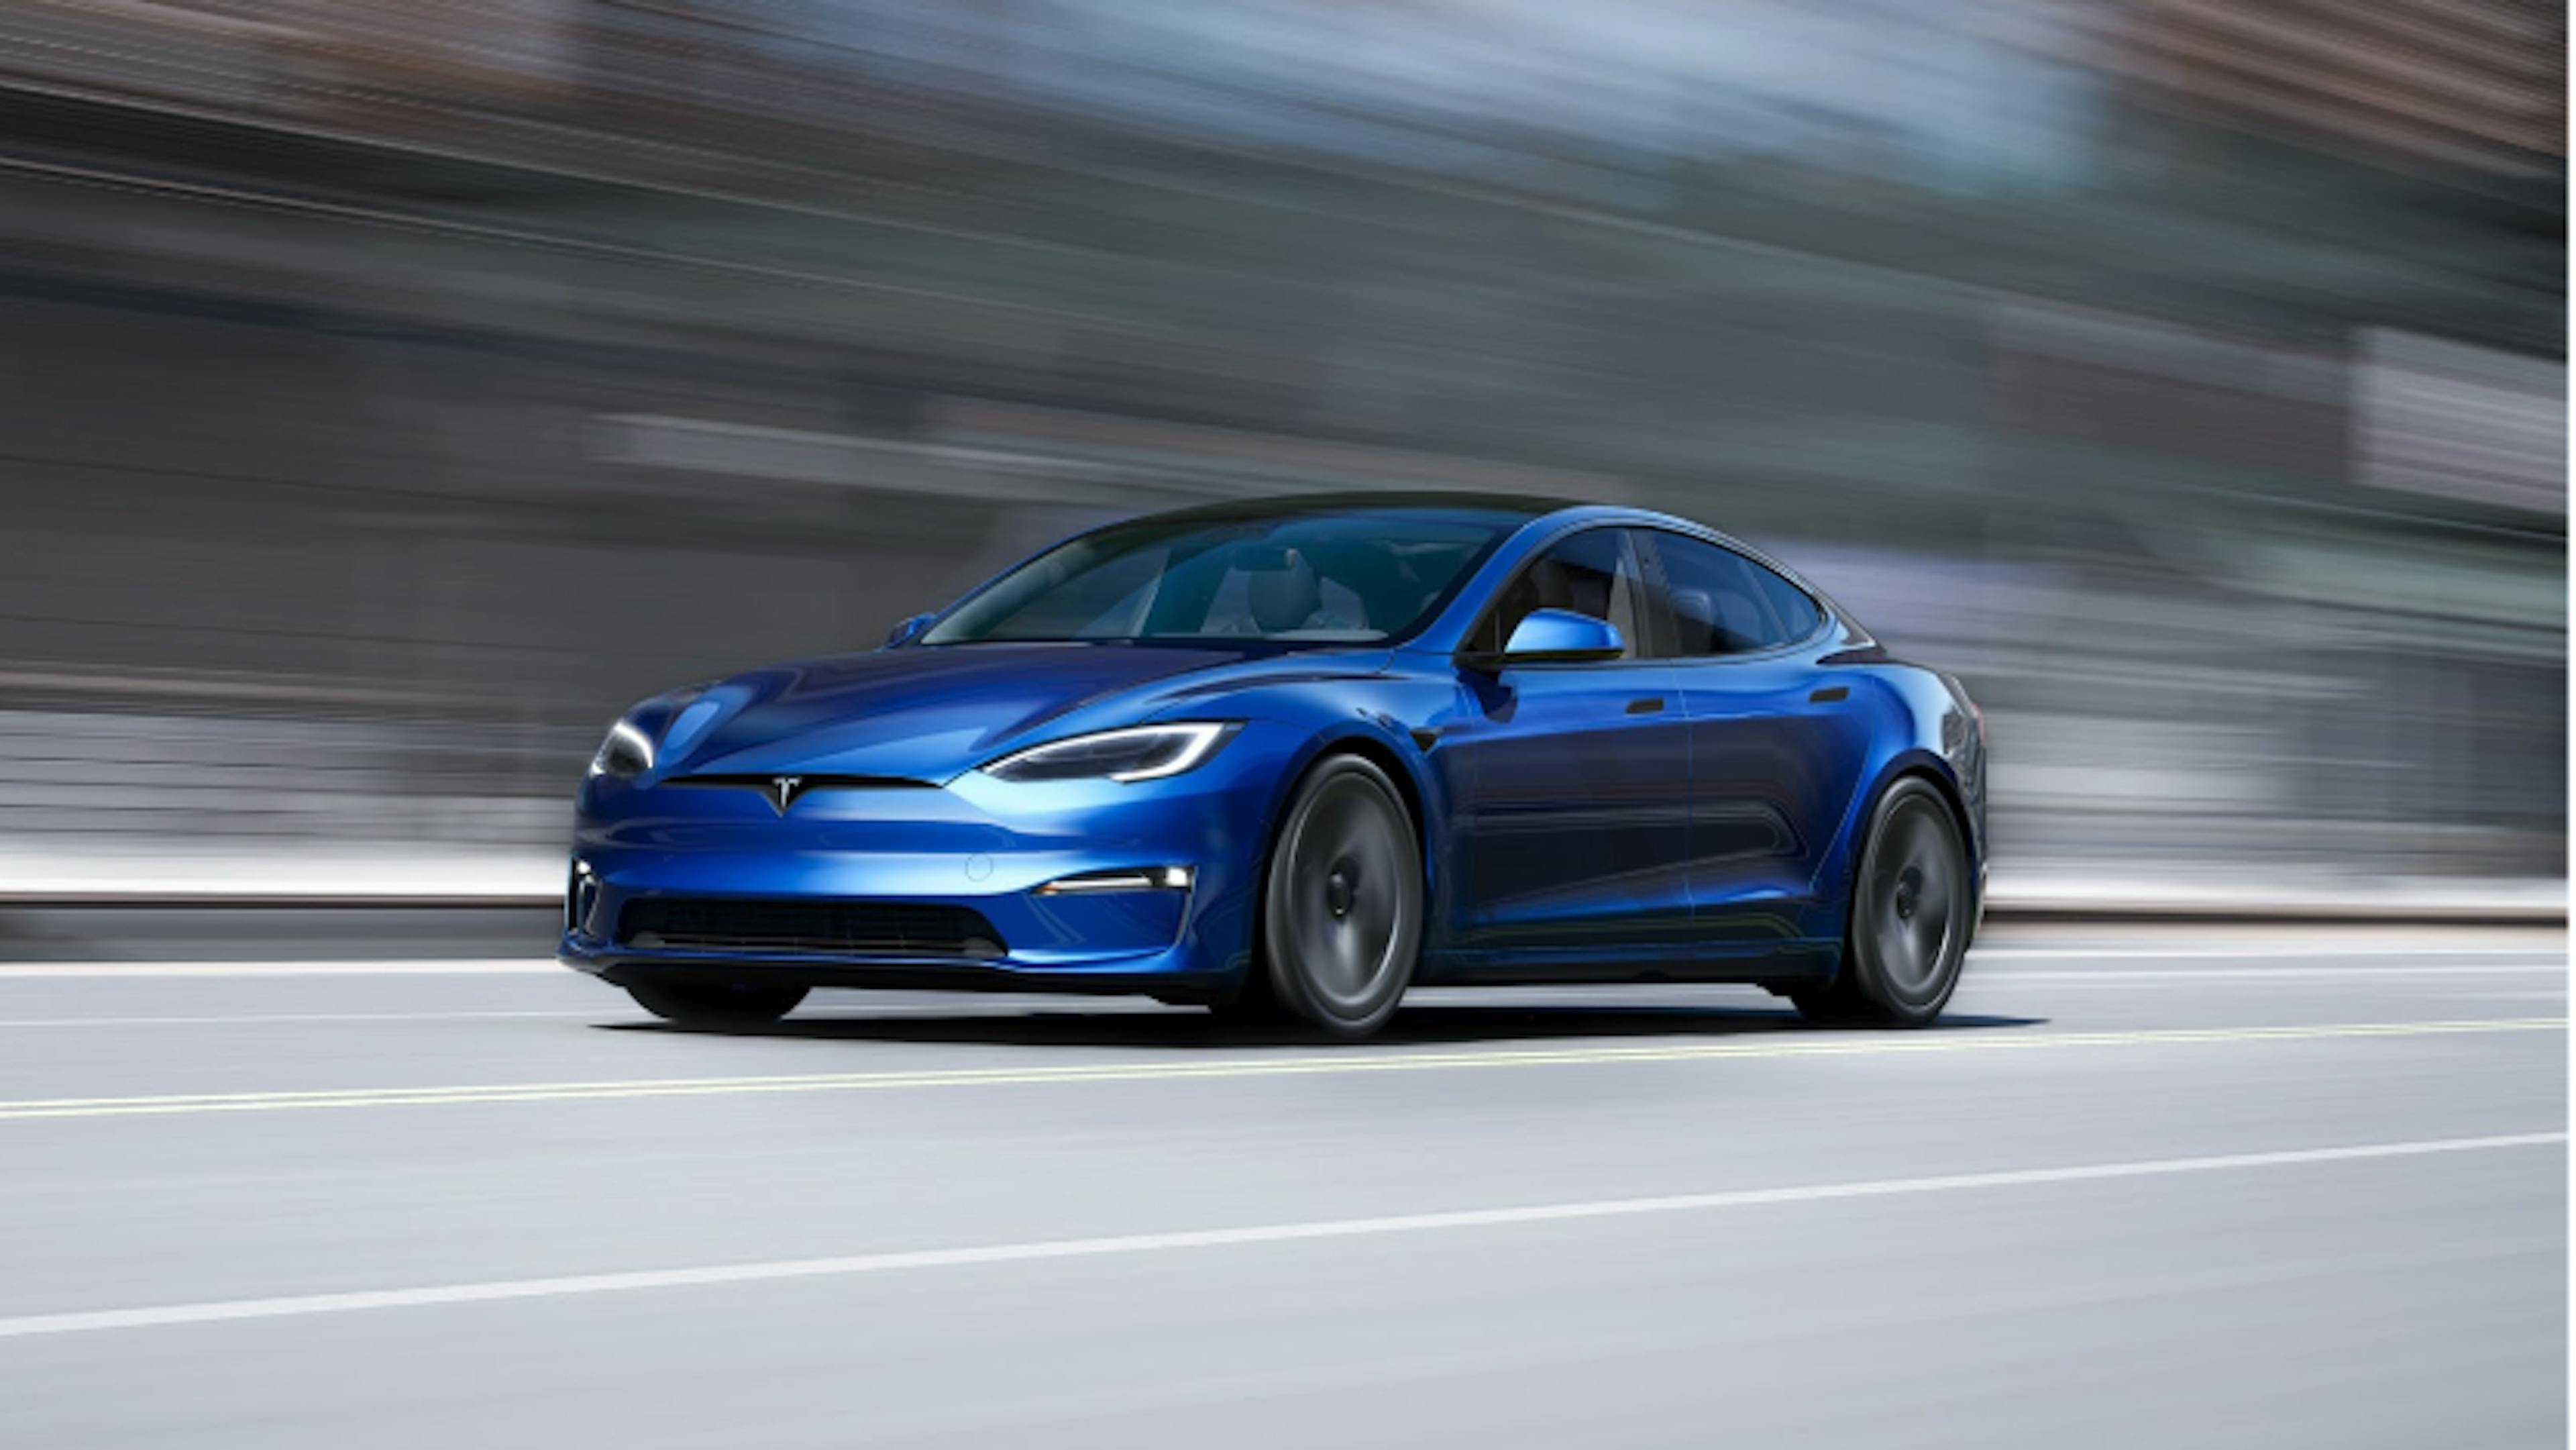 Blauer Tesla Model S fahrend